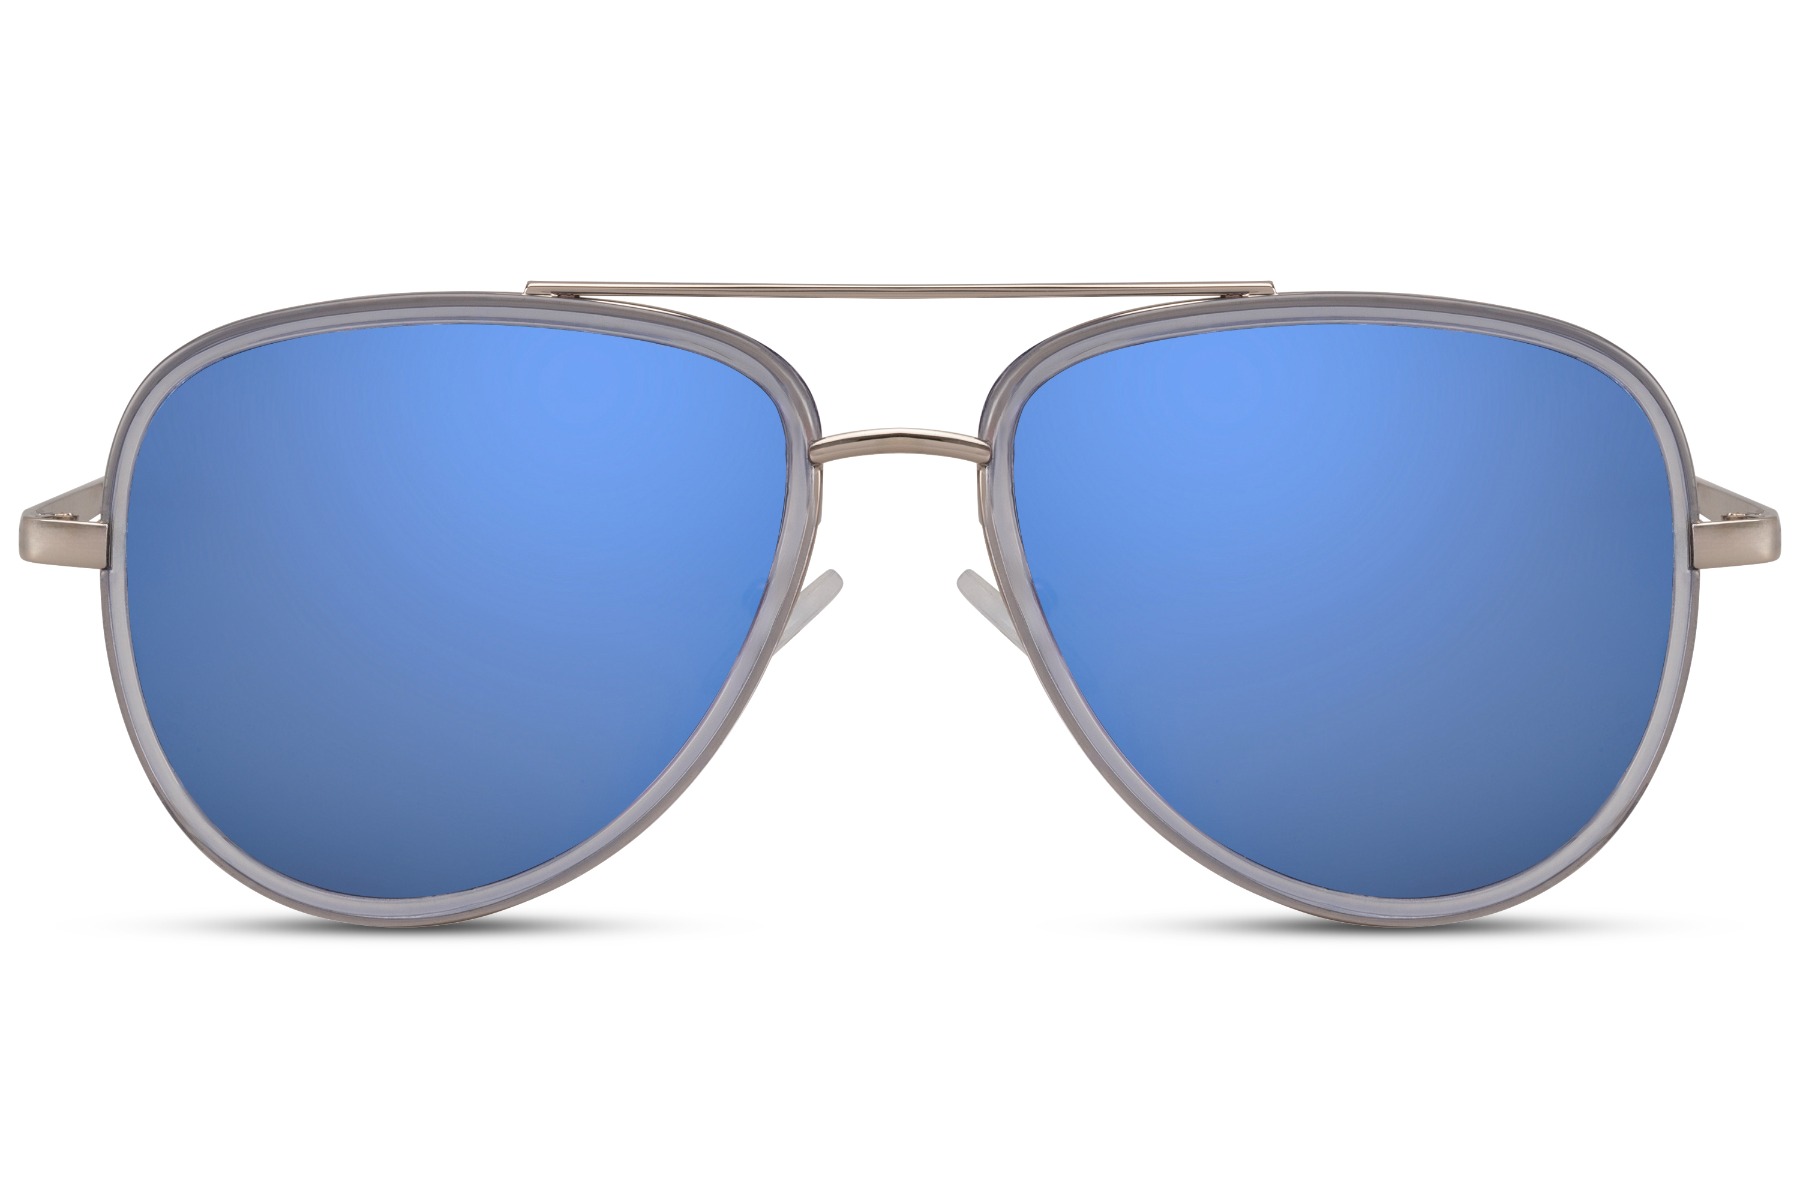 Gouden Pilotenbril Met Blauwe Spiegelglazen